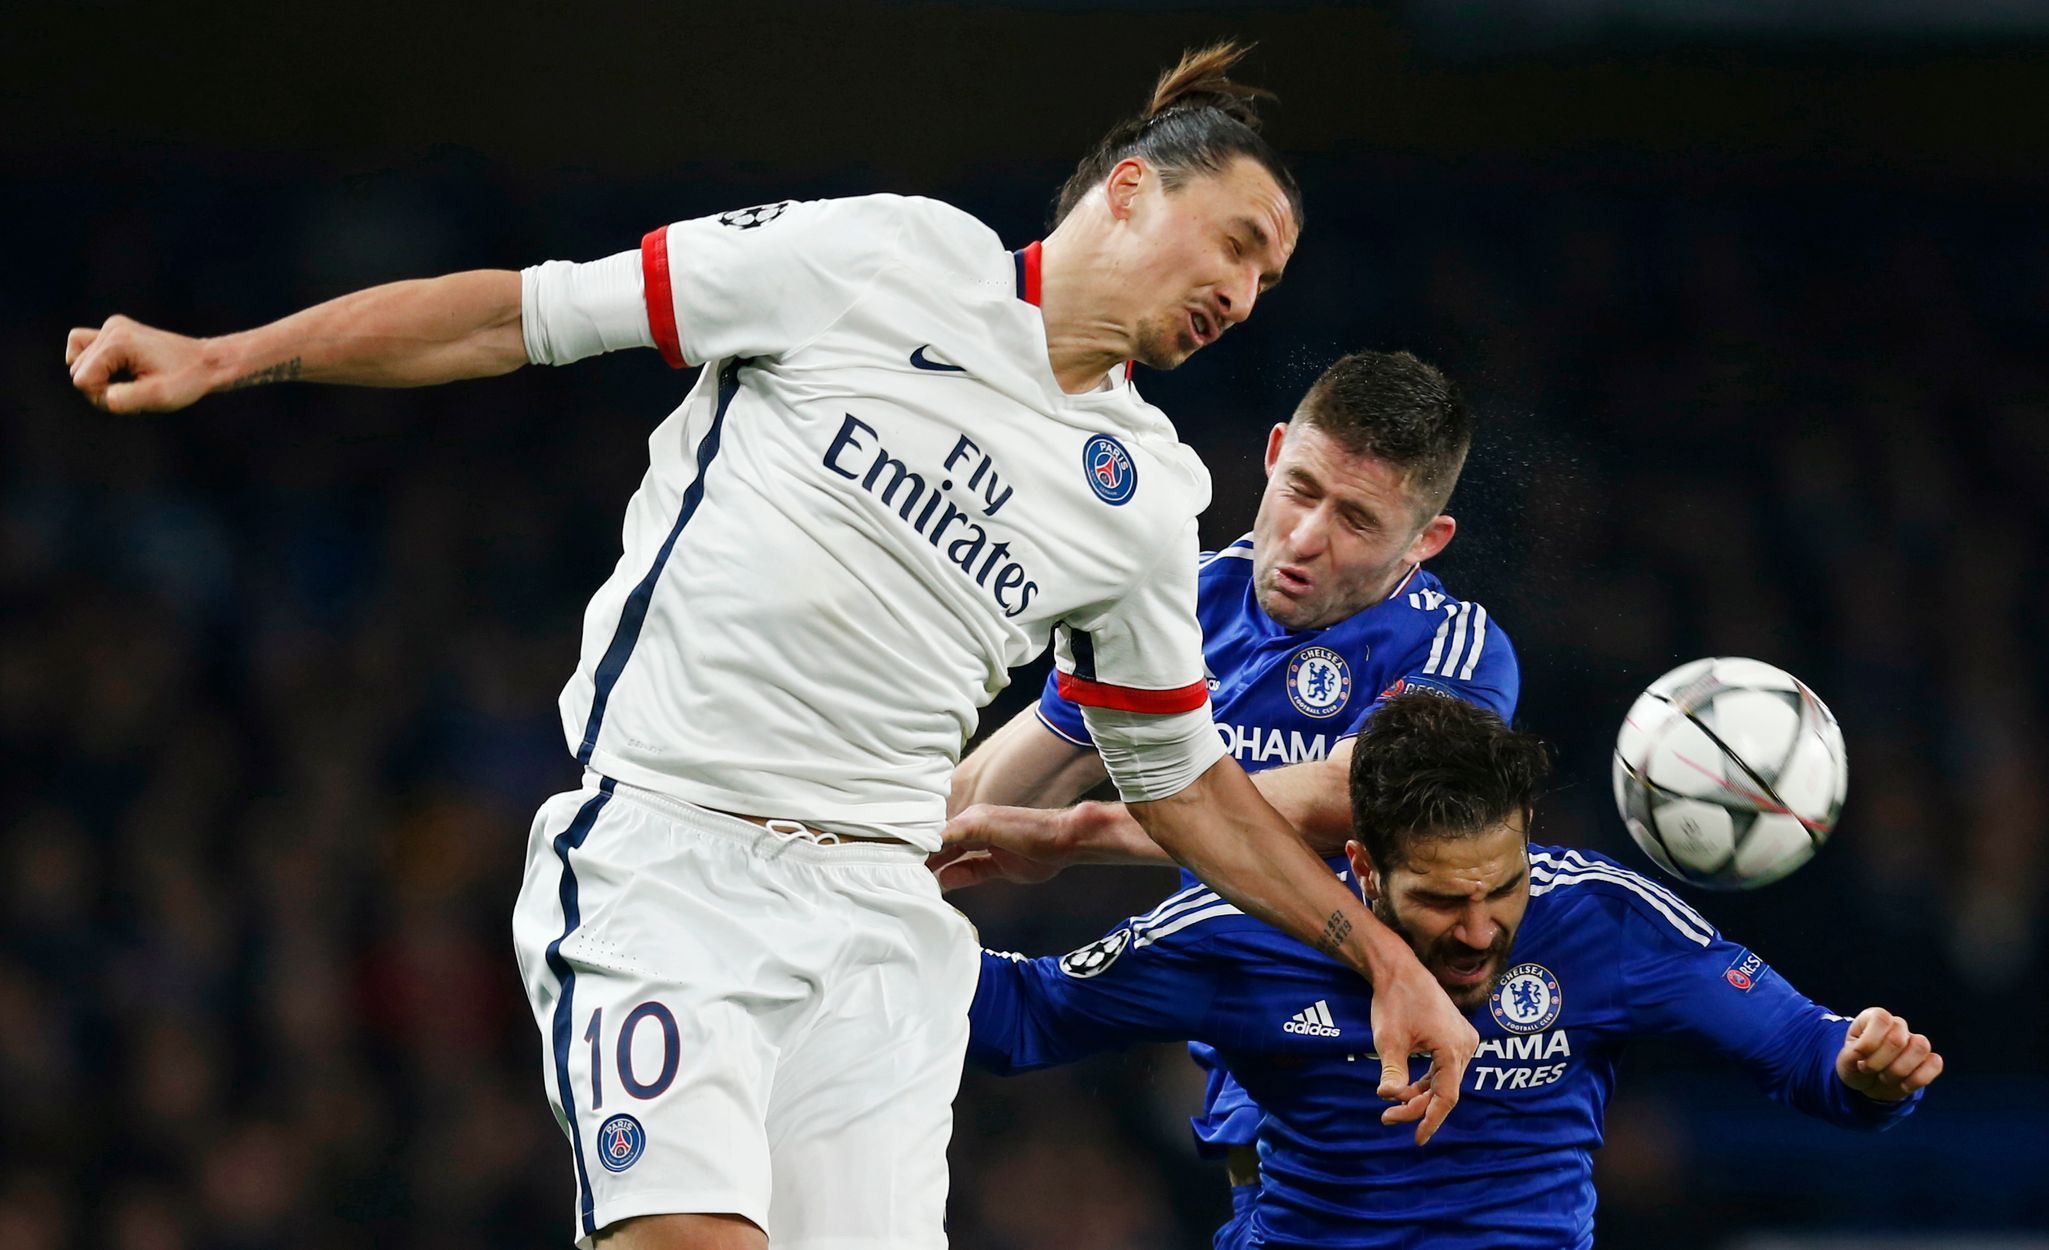 Zlatan Ibrahimovič proti Chelsea, odveta osmifinále Ligy mistrů 2015/16